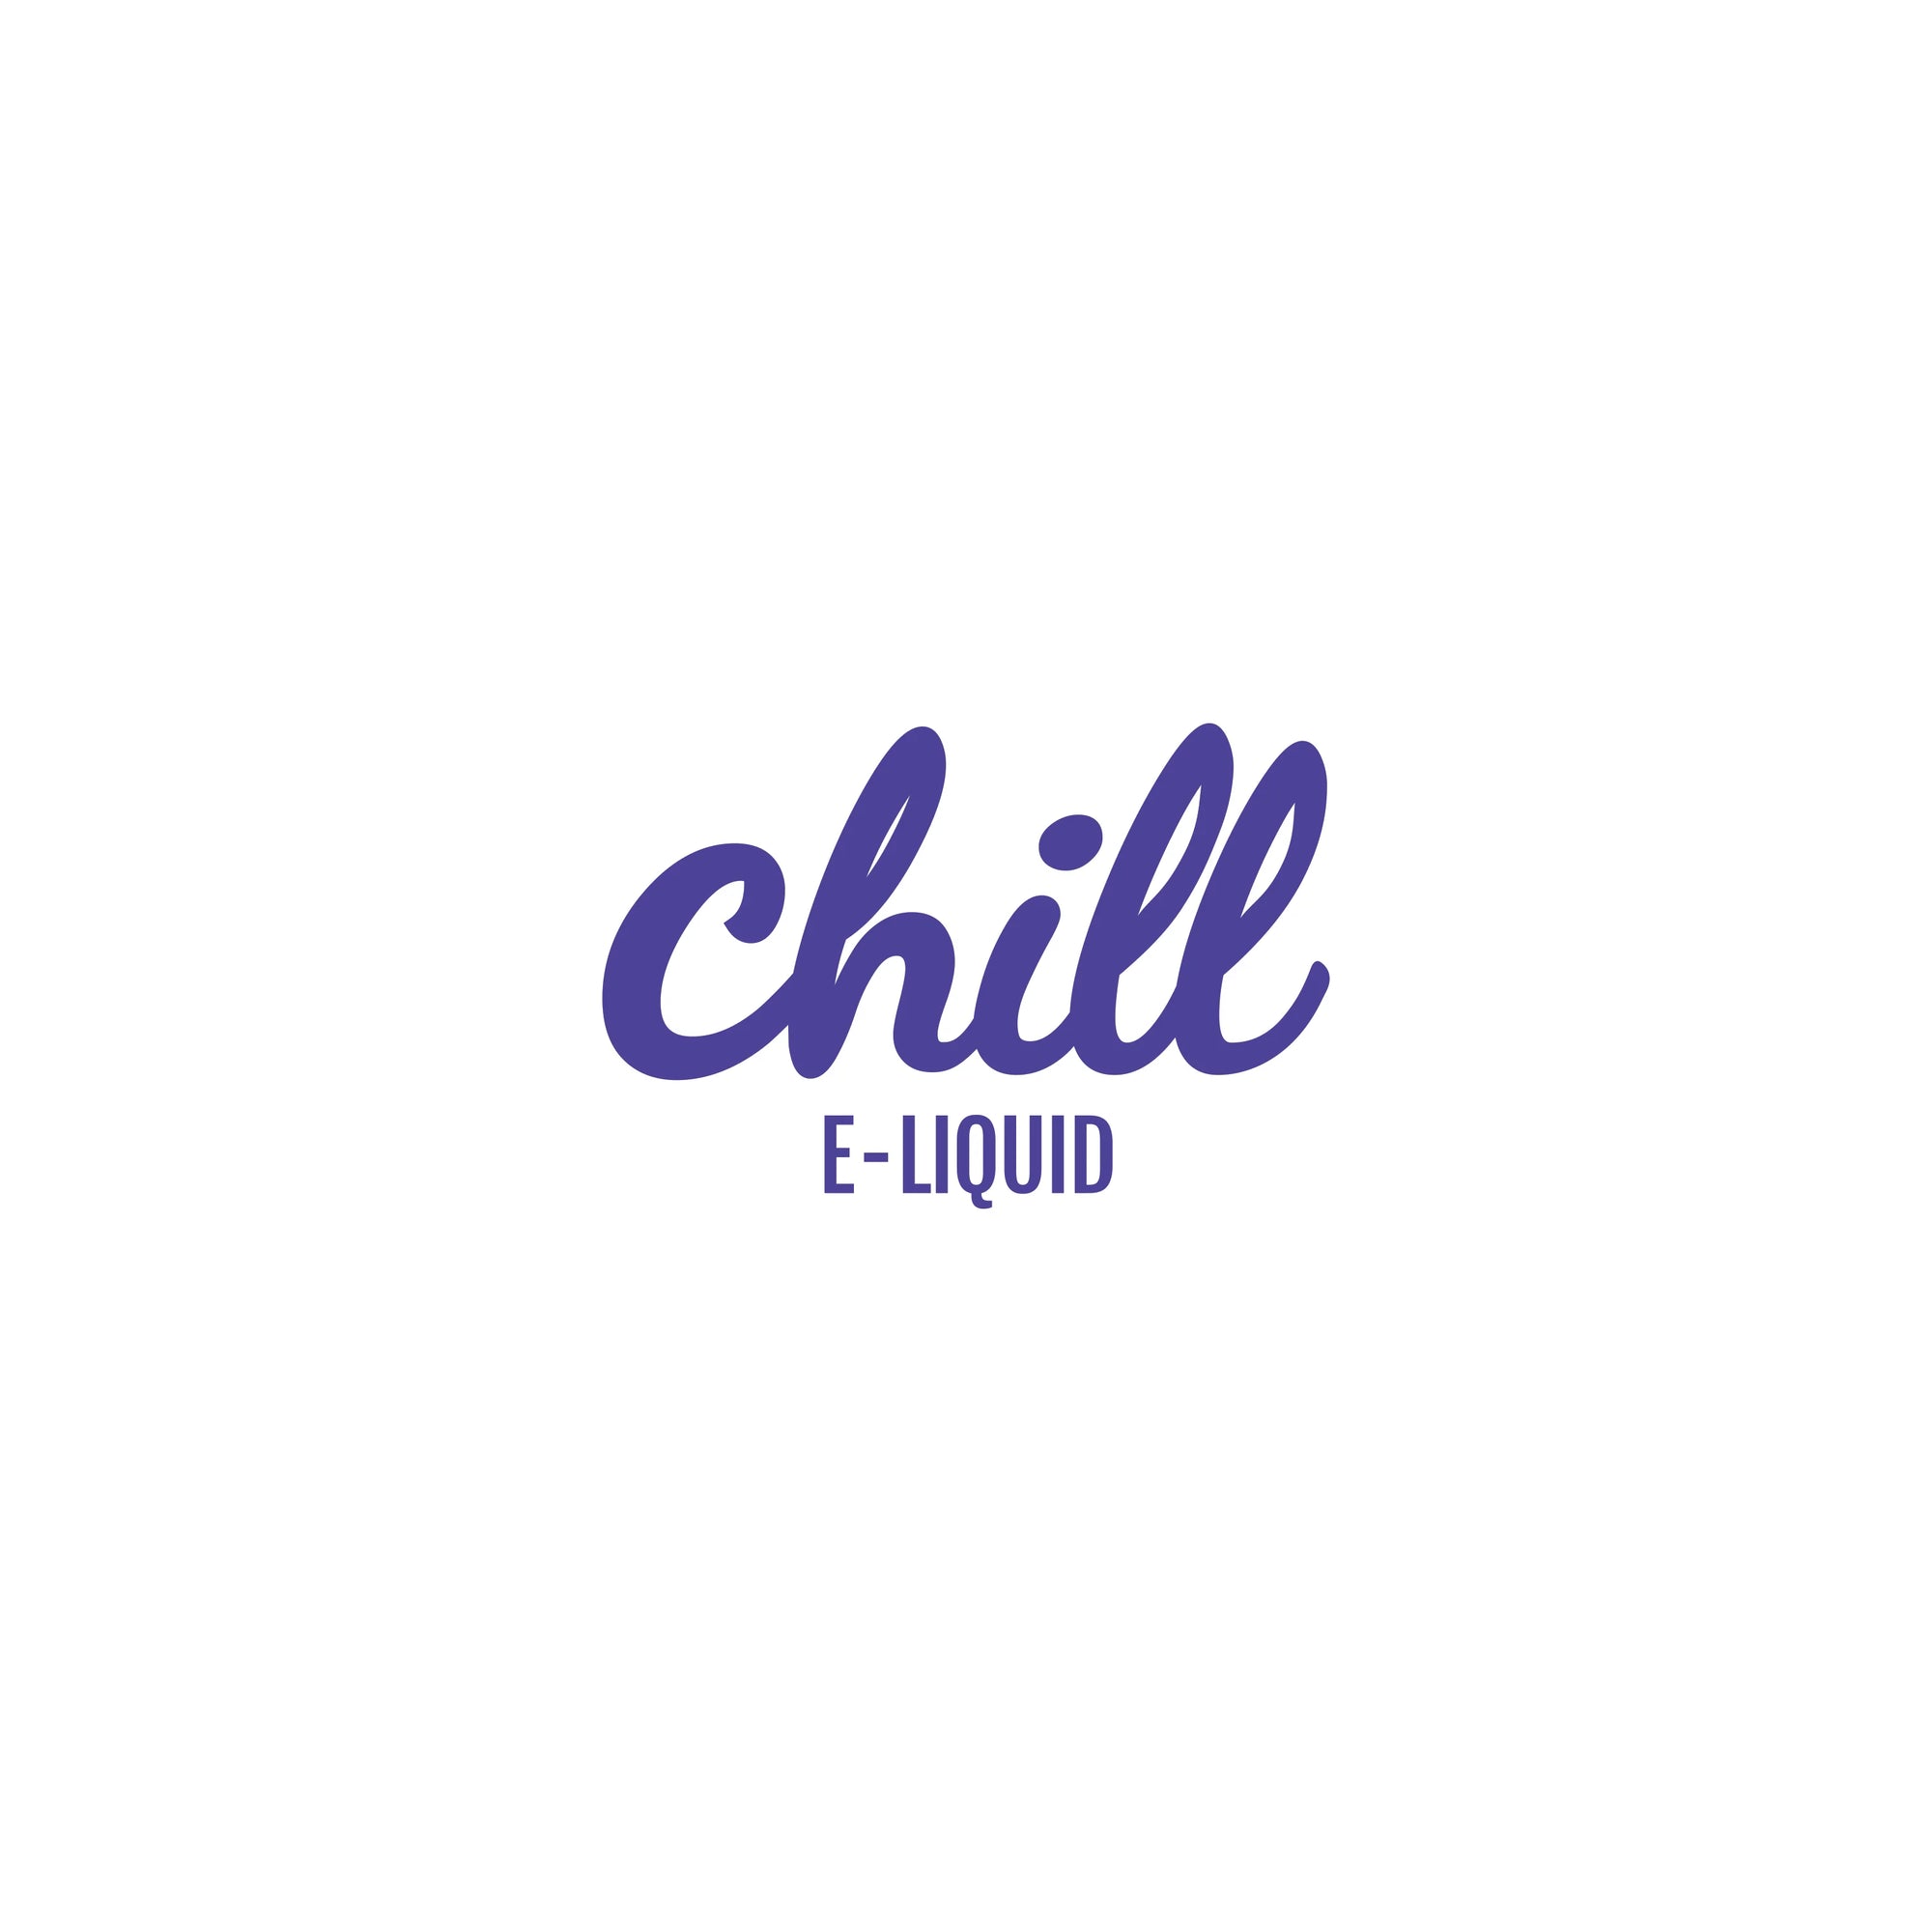 Chill E-Liquid - Freebase (60ML) EXCISE TAX*